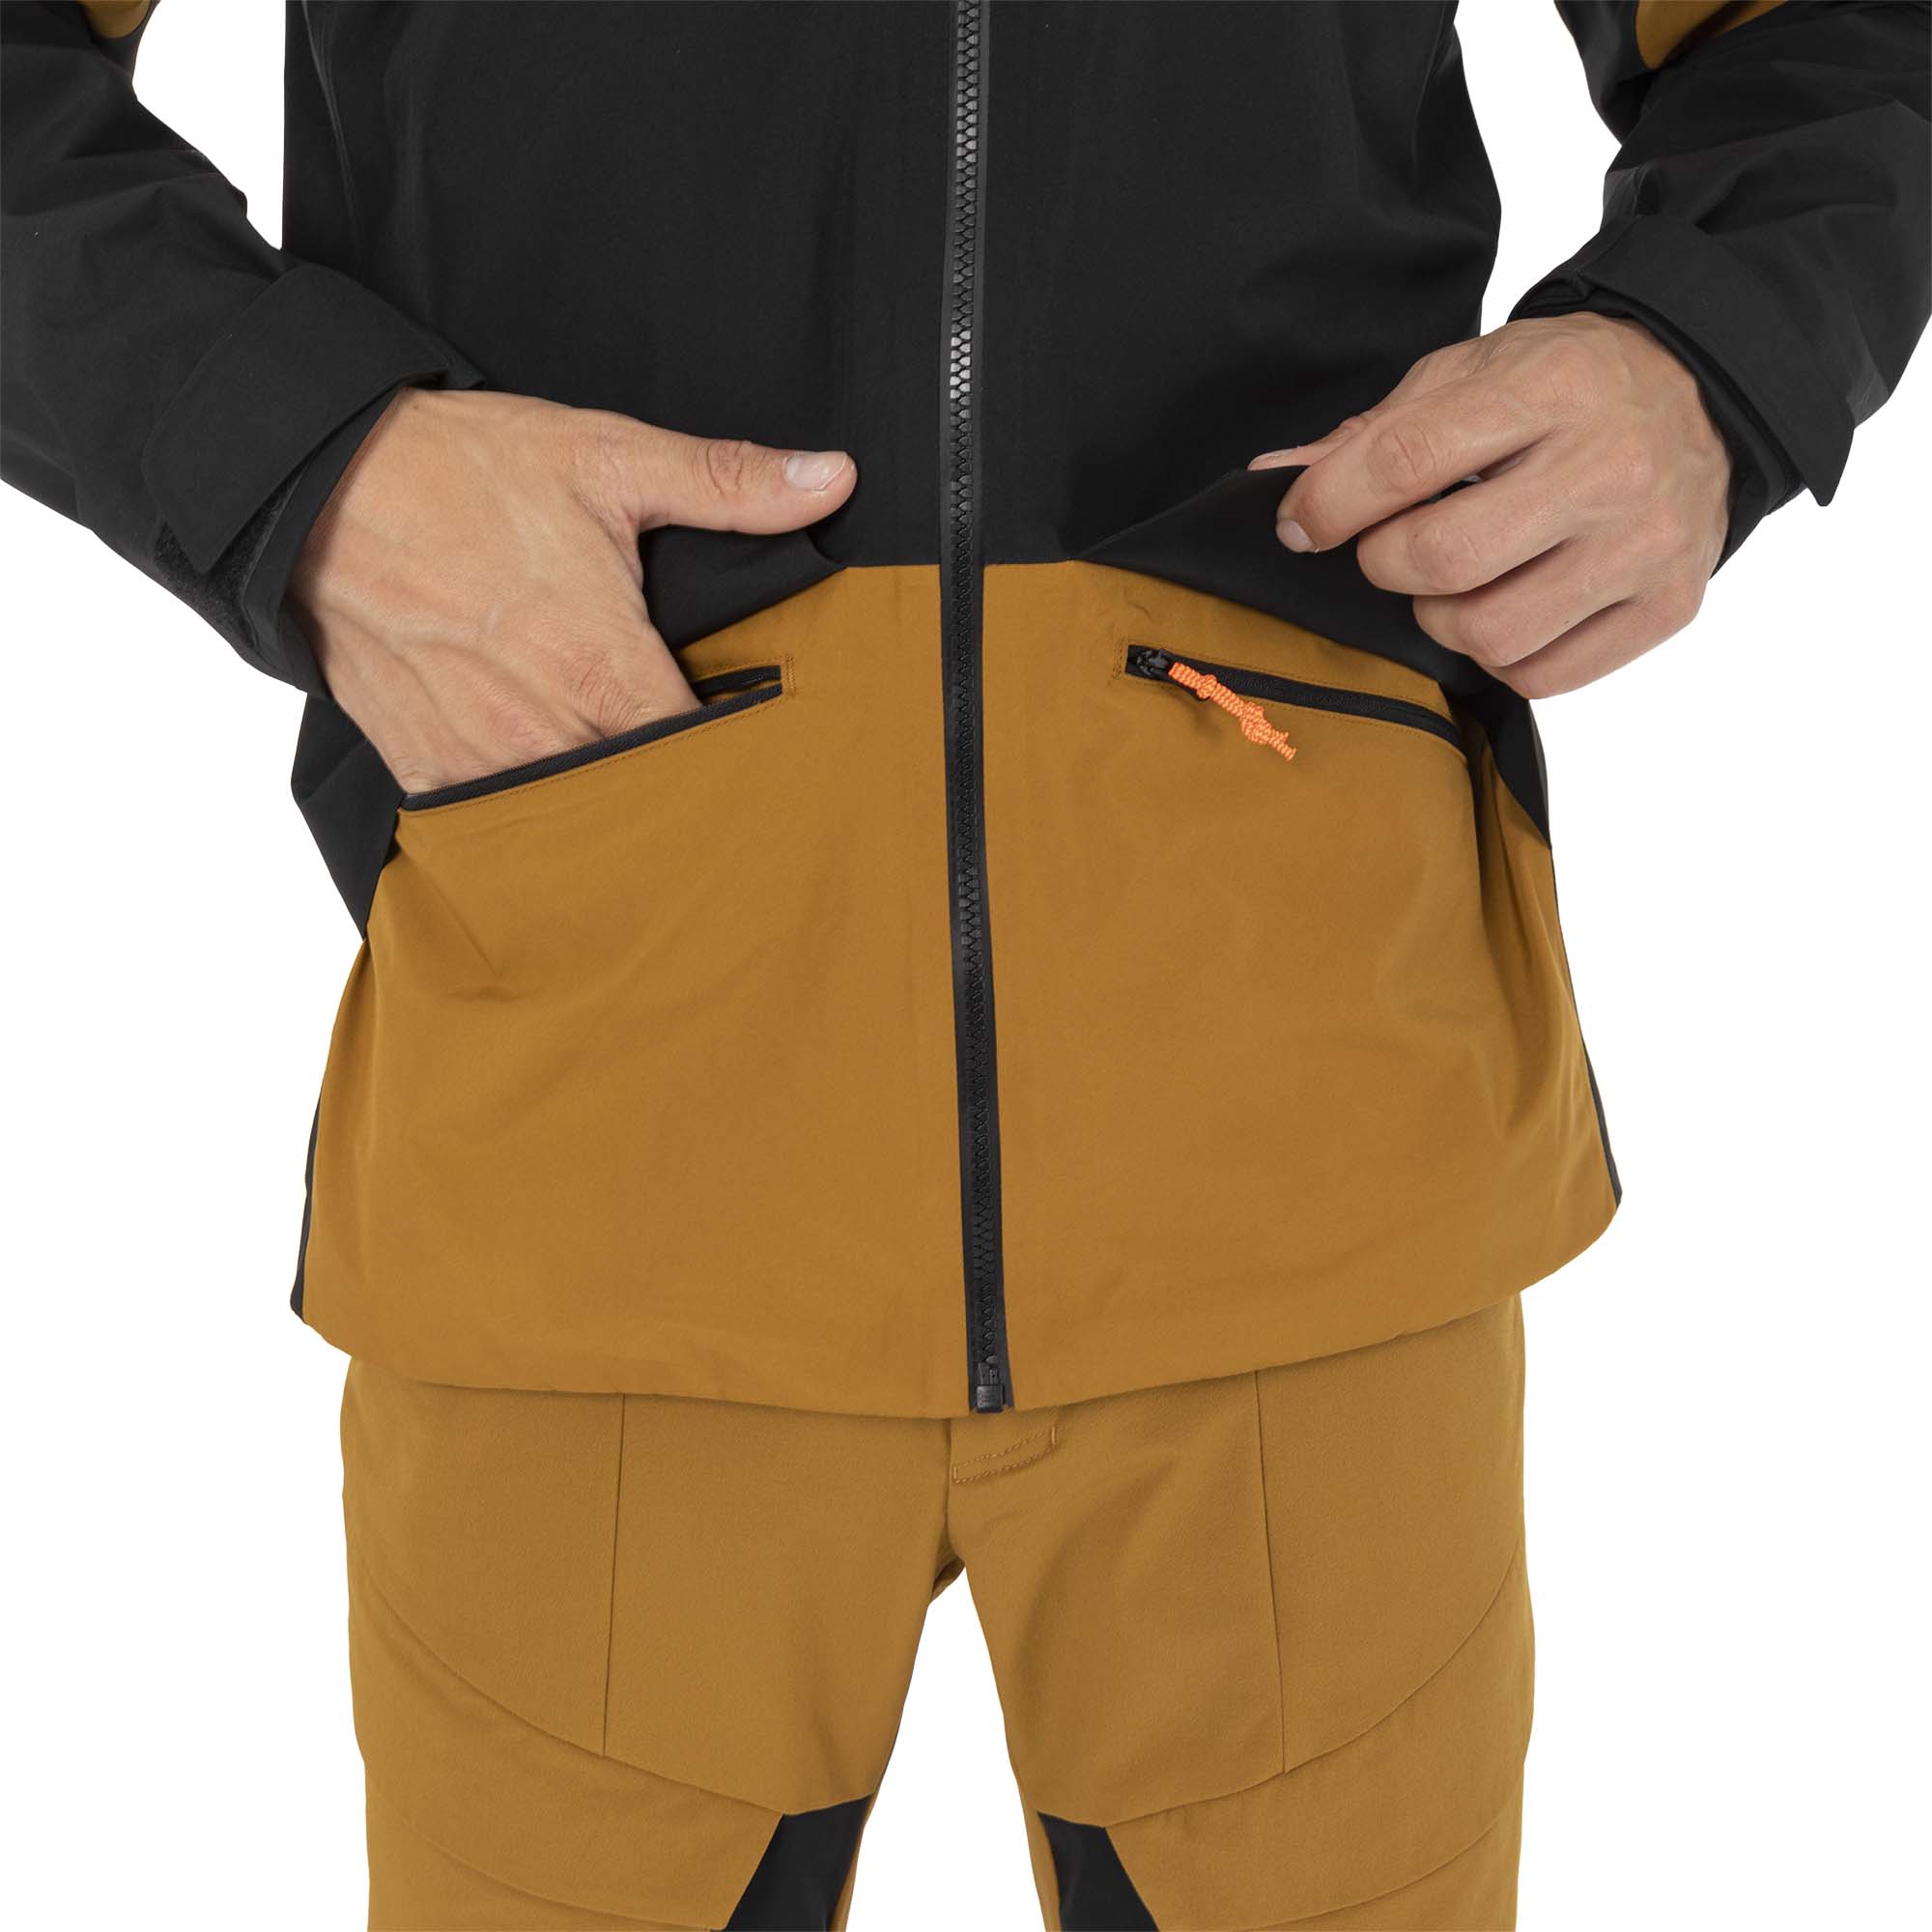 Salewa Puez GORE-TEX Men's 2L Waterproof Jacket